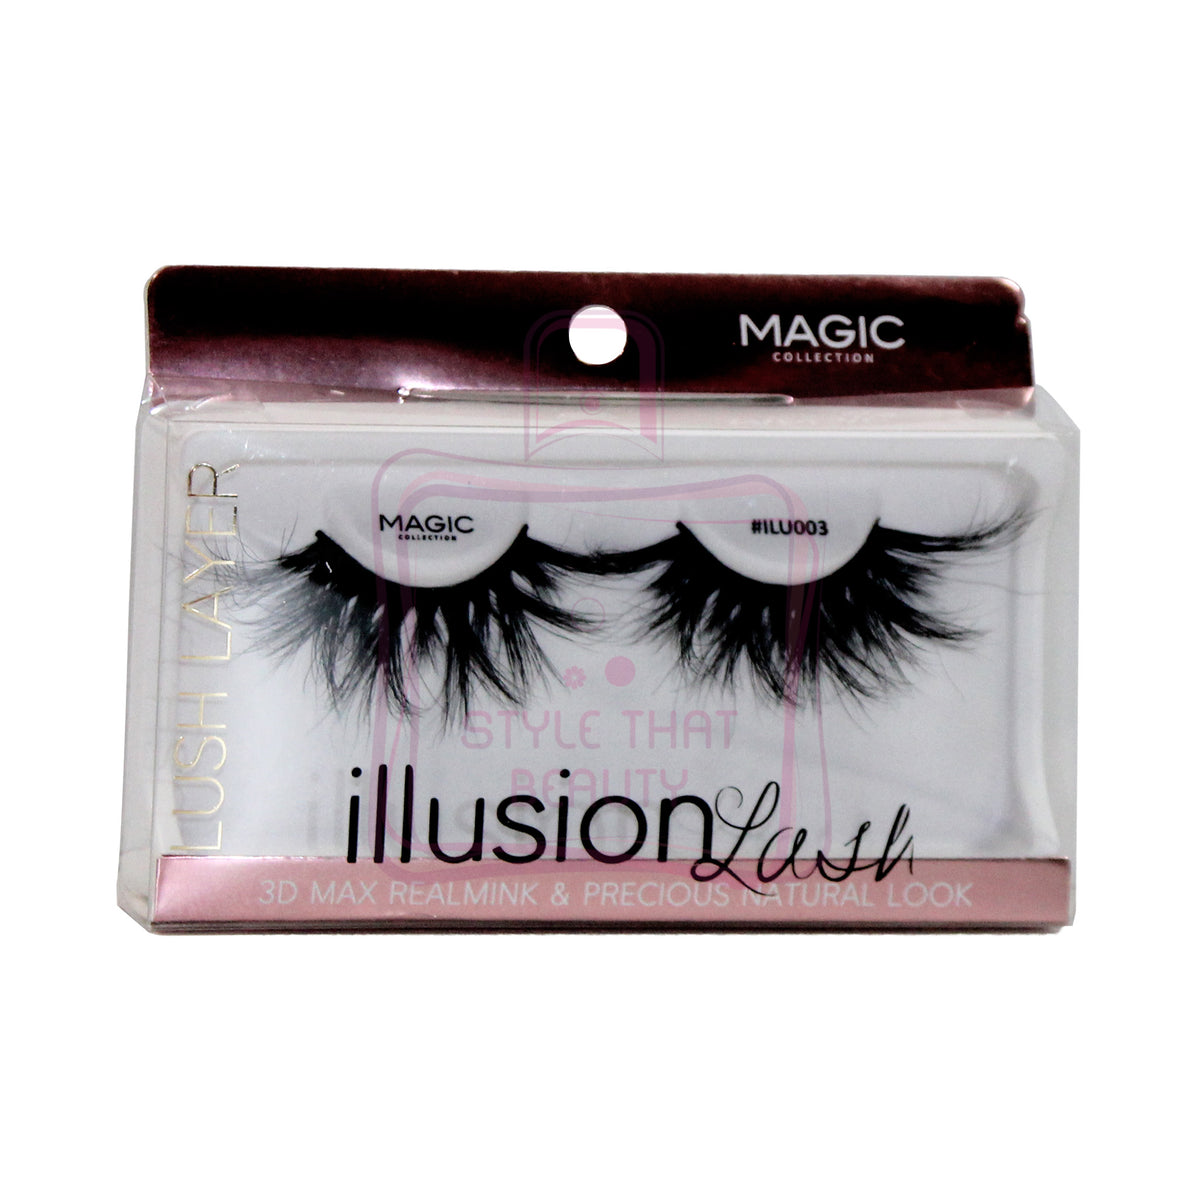 Magic Illusion Lash 3D Max Real Mink and Precious Natural Look – Style that  beauty inc